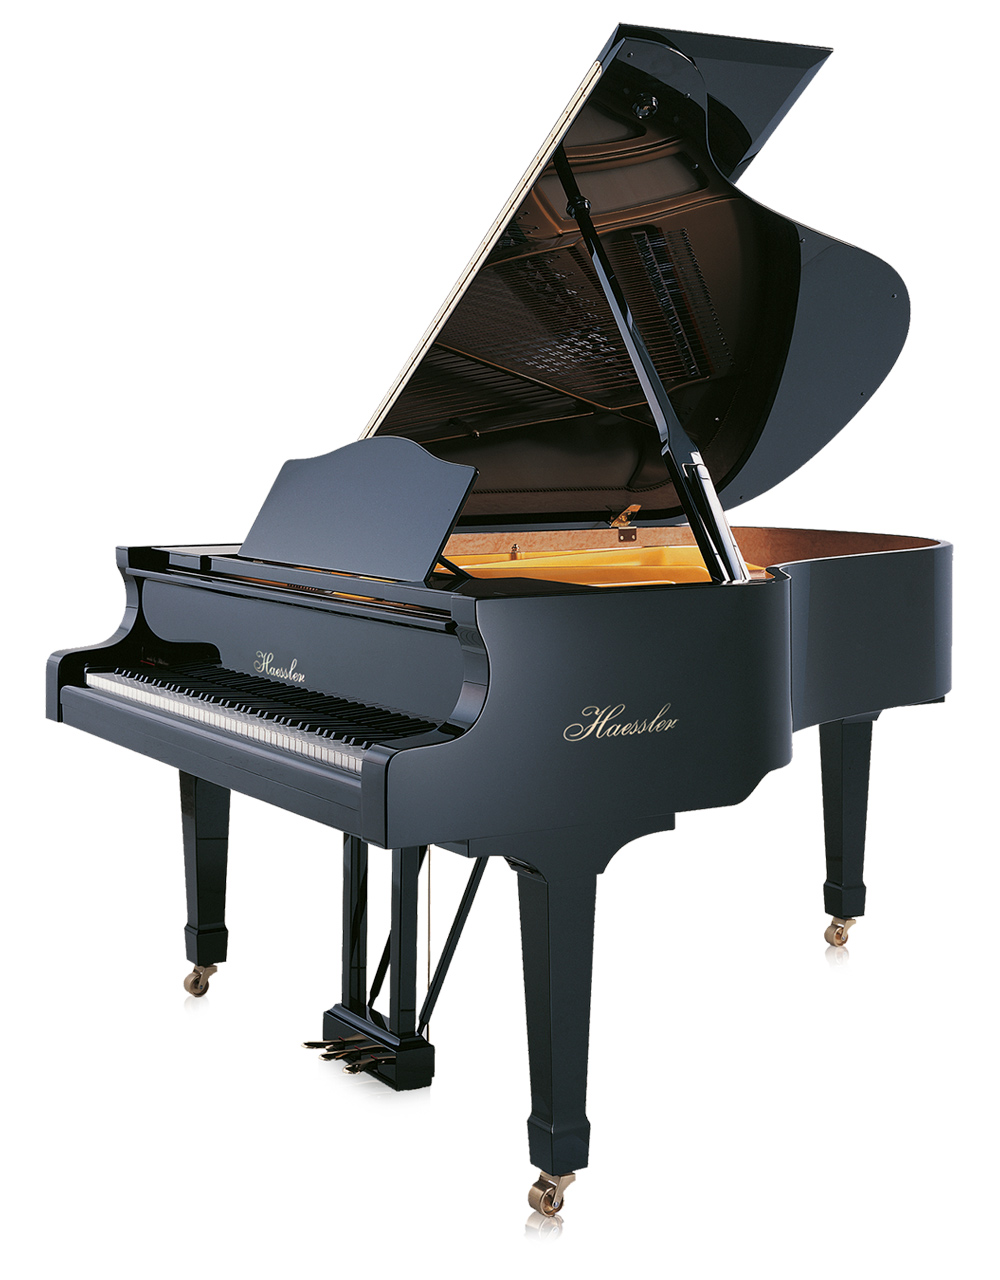 Haessler 186 Grand Piano